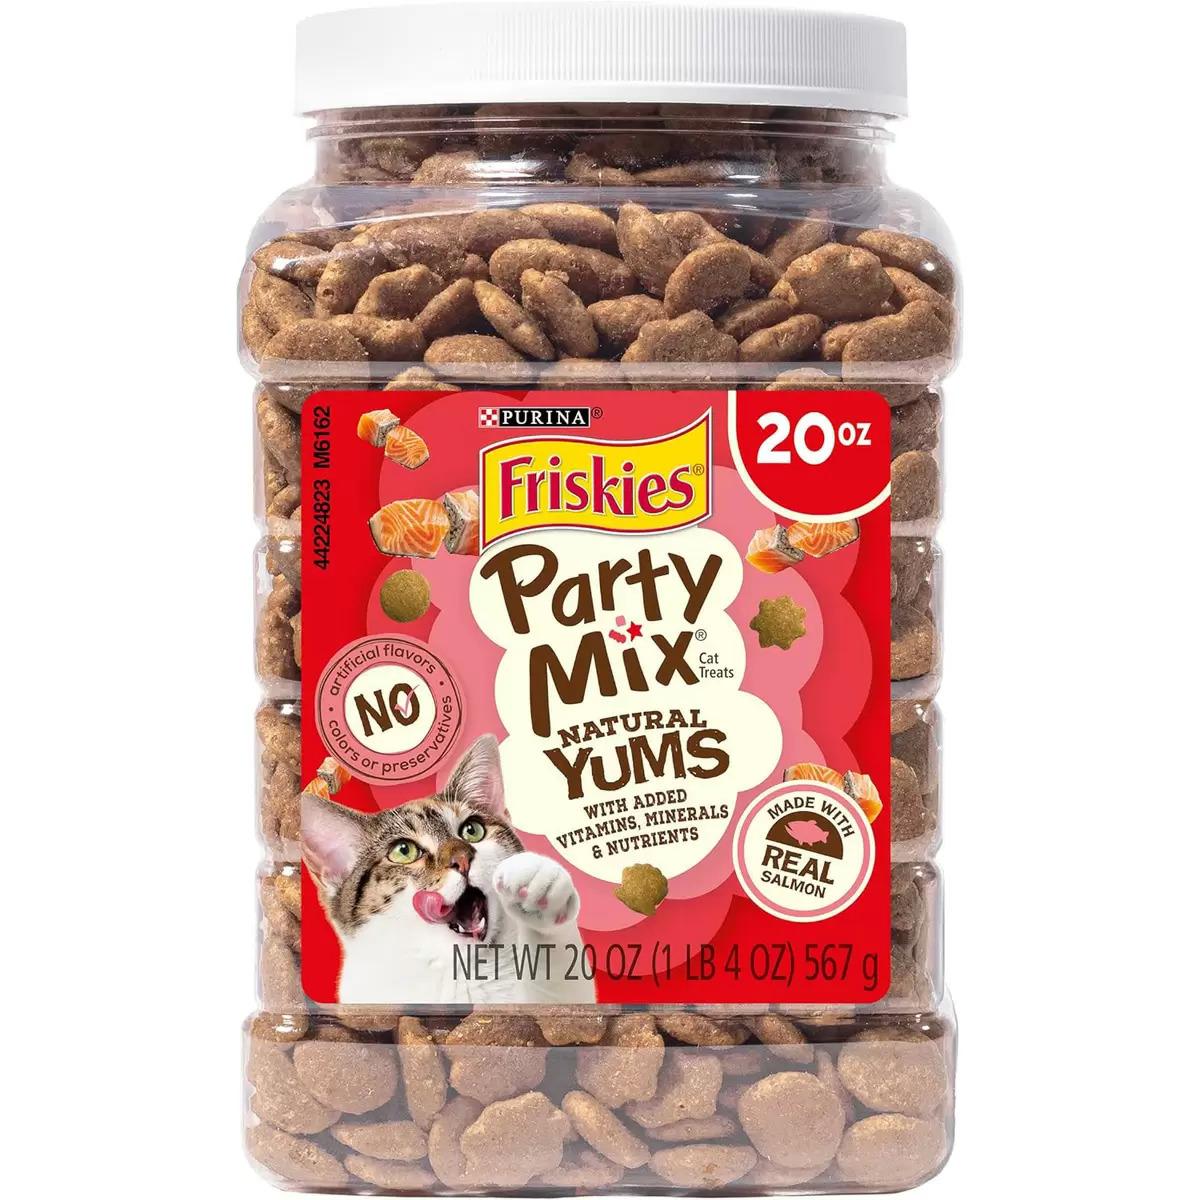 Purina Friskies Natural Cat Treats Party Mix Natural Yums for $4.49